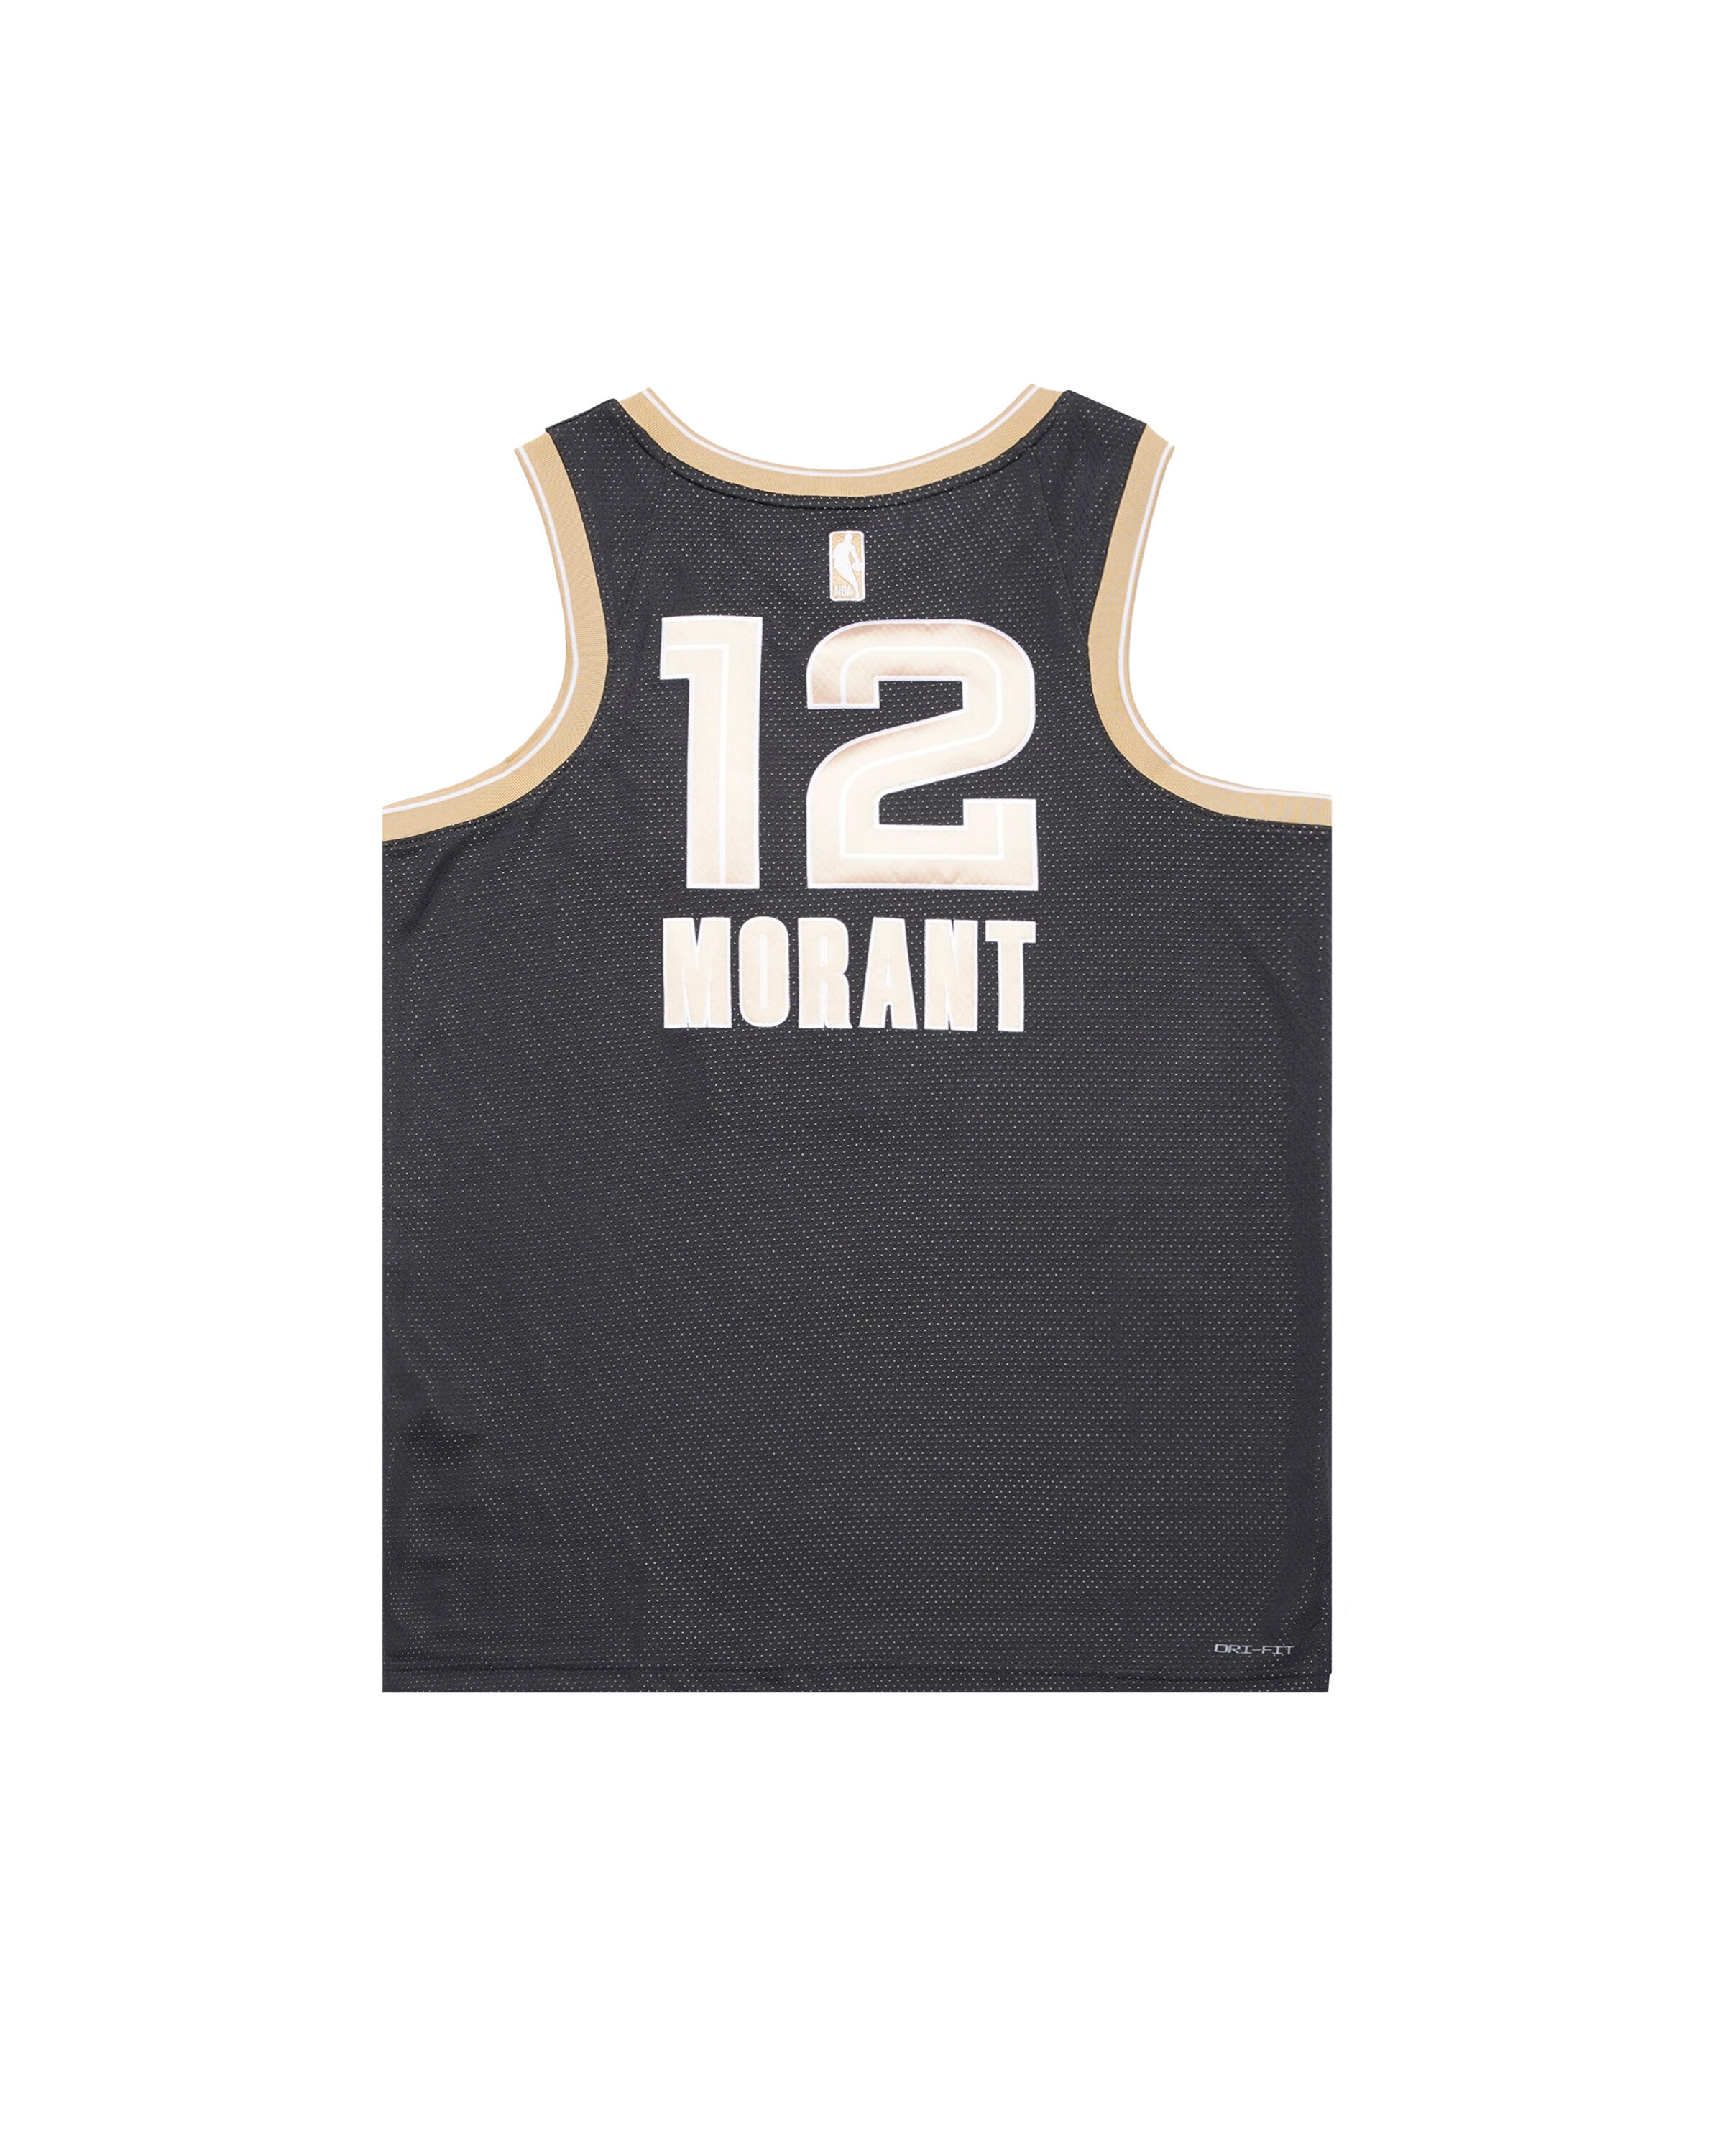 Nike Jersey - Memphis Grizzlies 'Ja Morant'